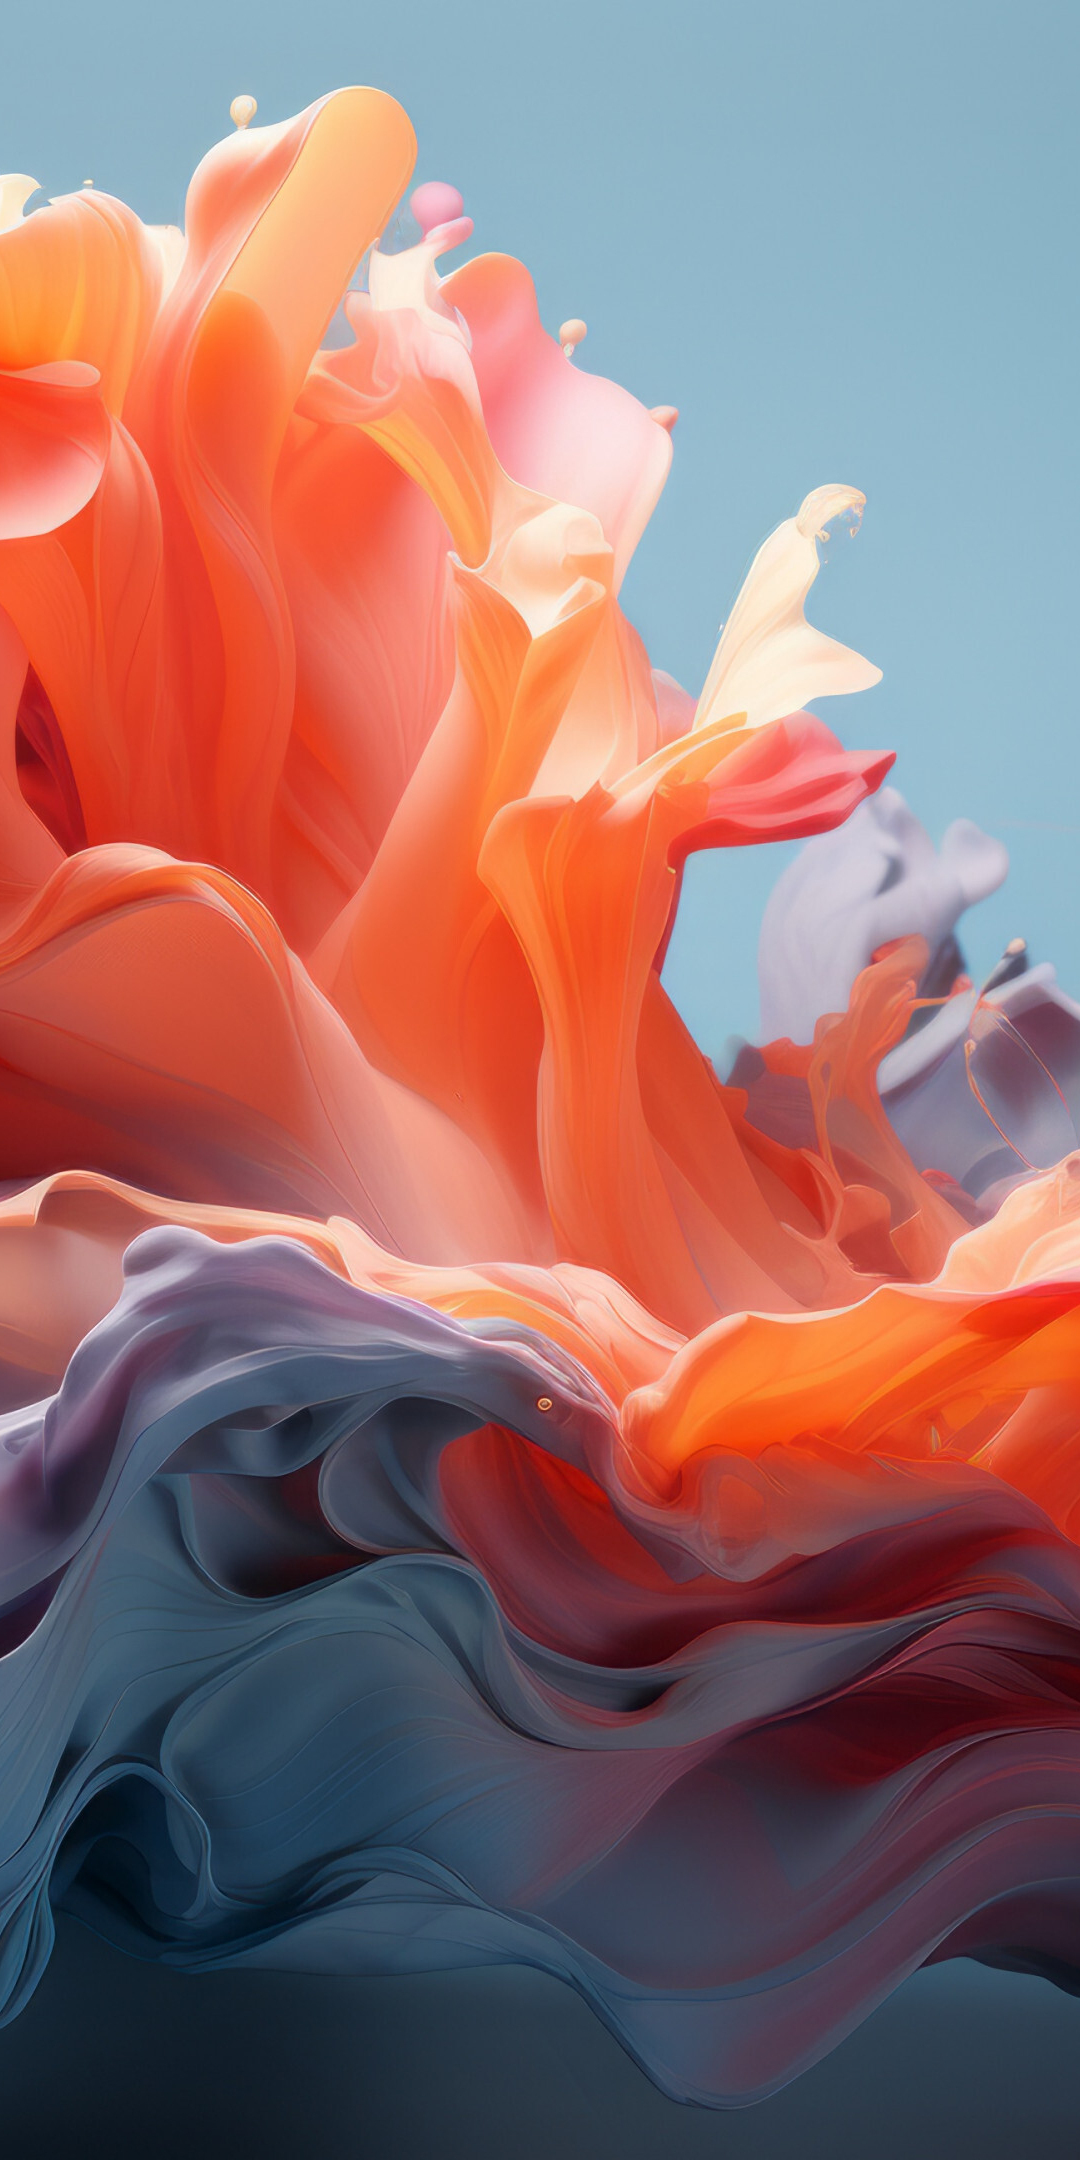 Colour blast, abstract, Windows 11 stock photo, 1080x2160 wallpaper